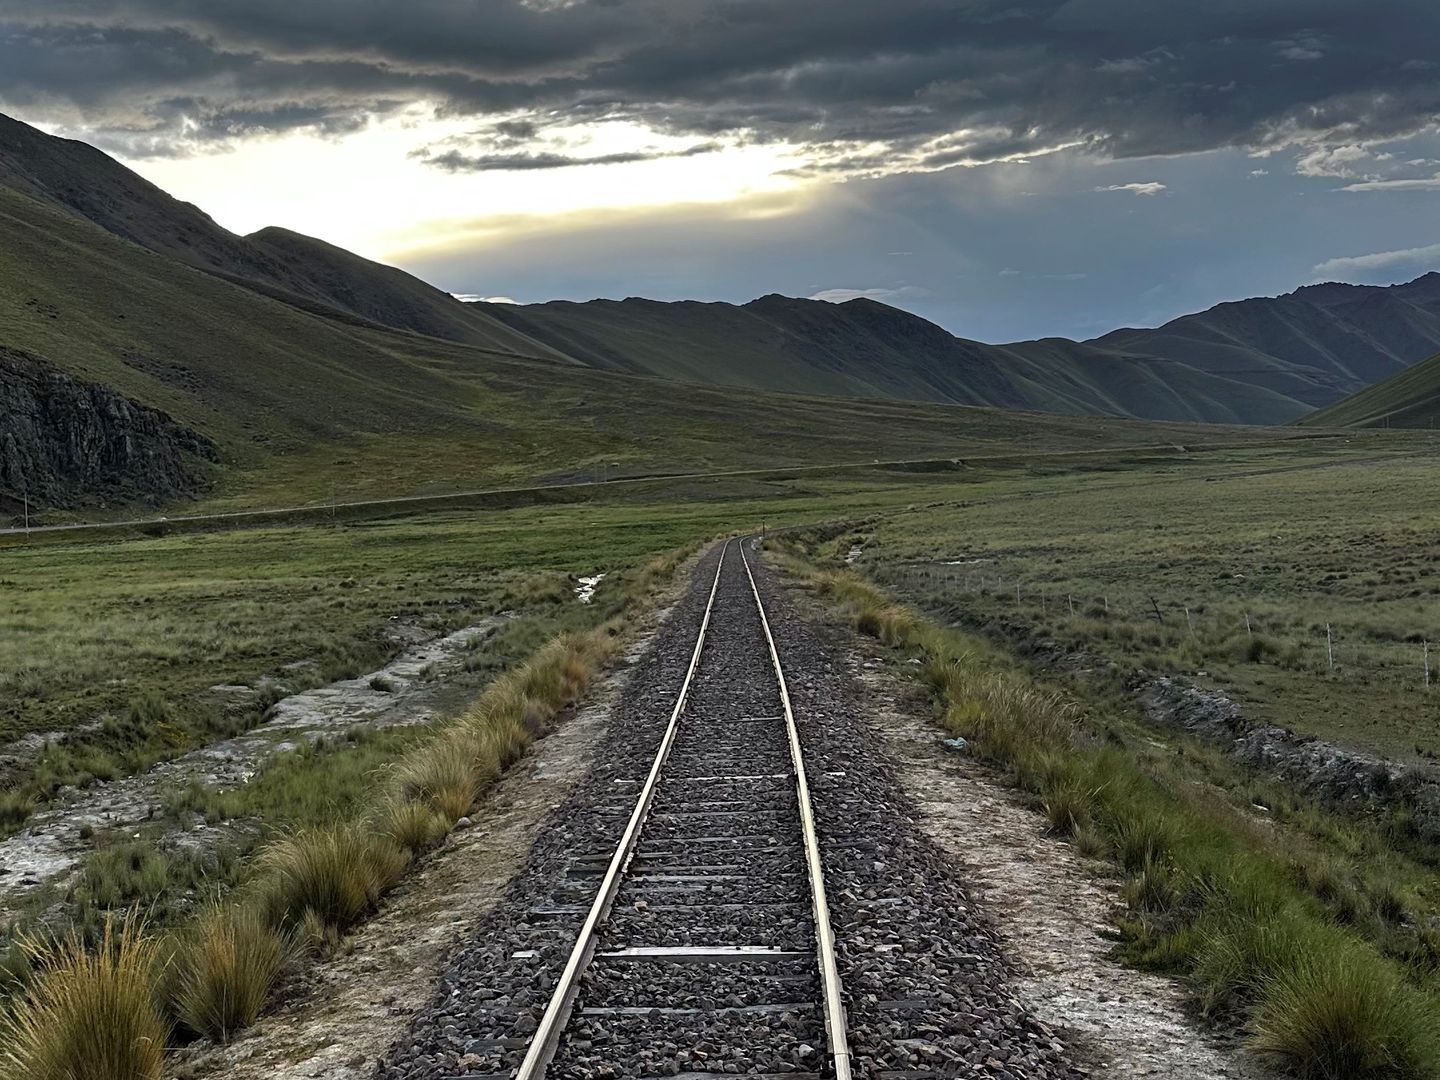 Landscapes from Belmond Andean Explorer train